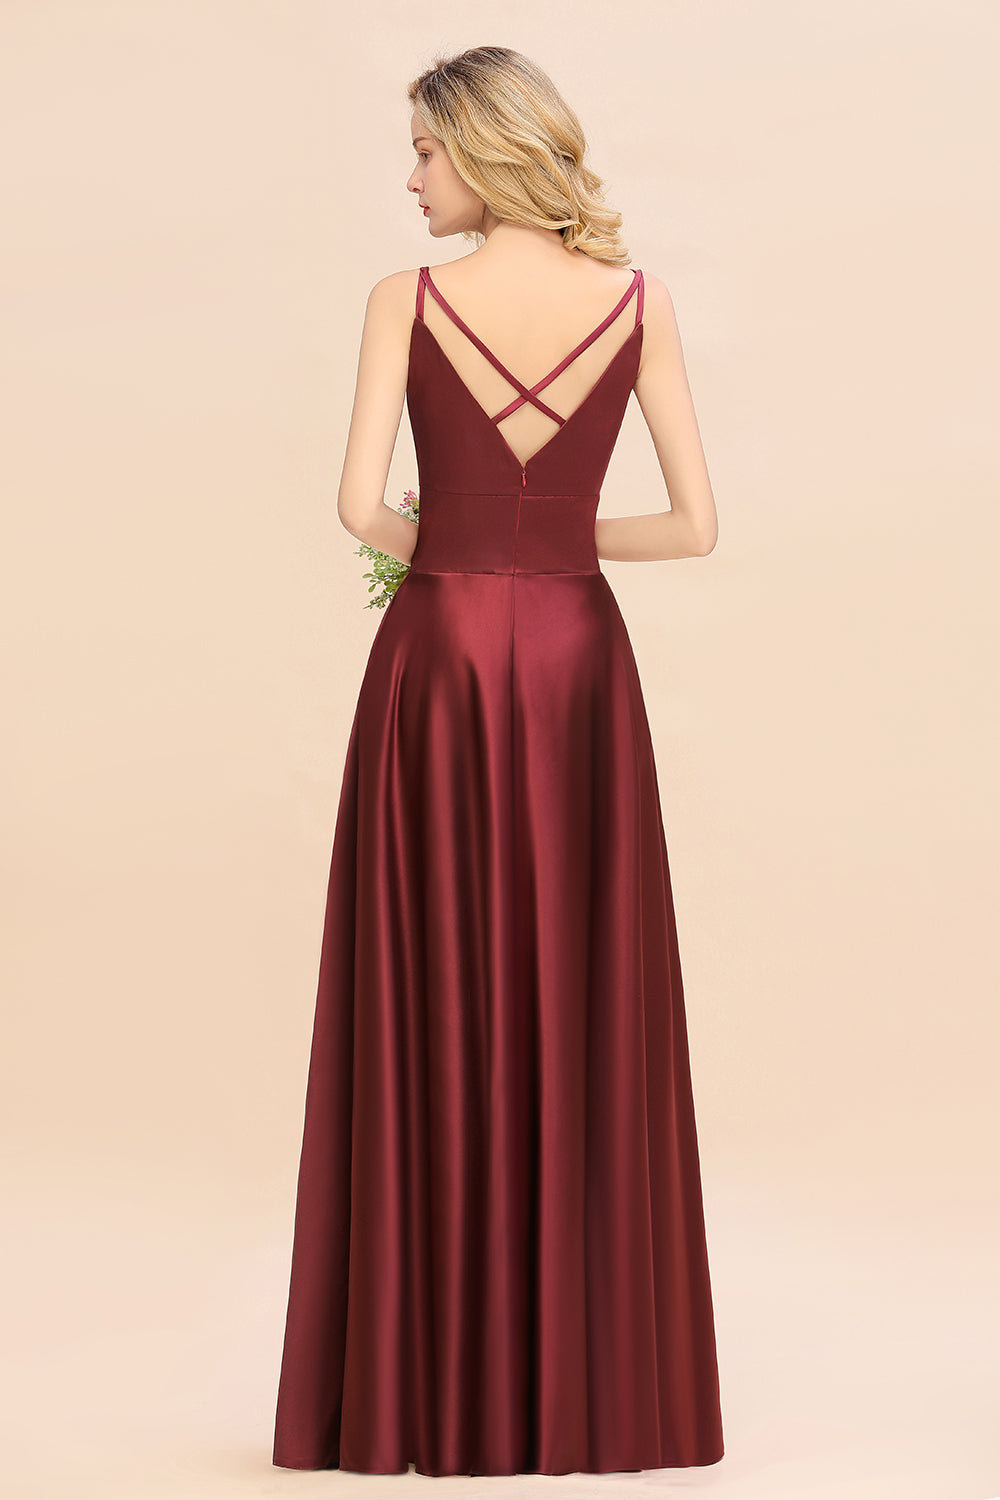 Chic Spaghetti-Straps Burgundy Satin Long Bridesmaid Dress Online-27dress